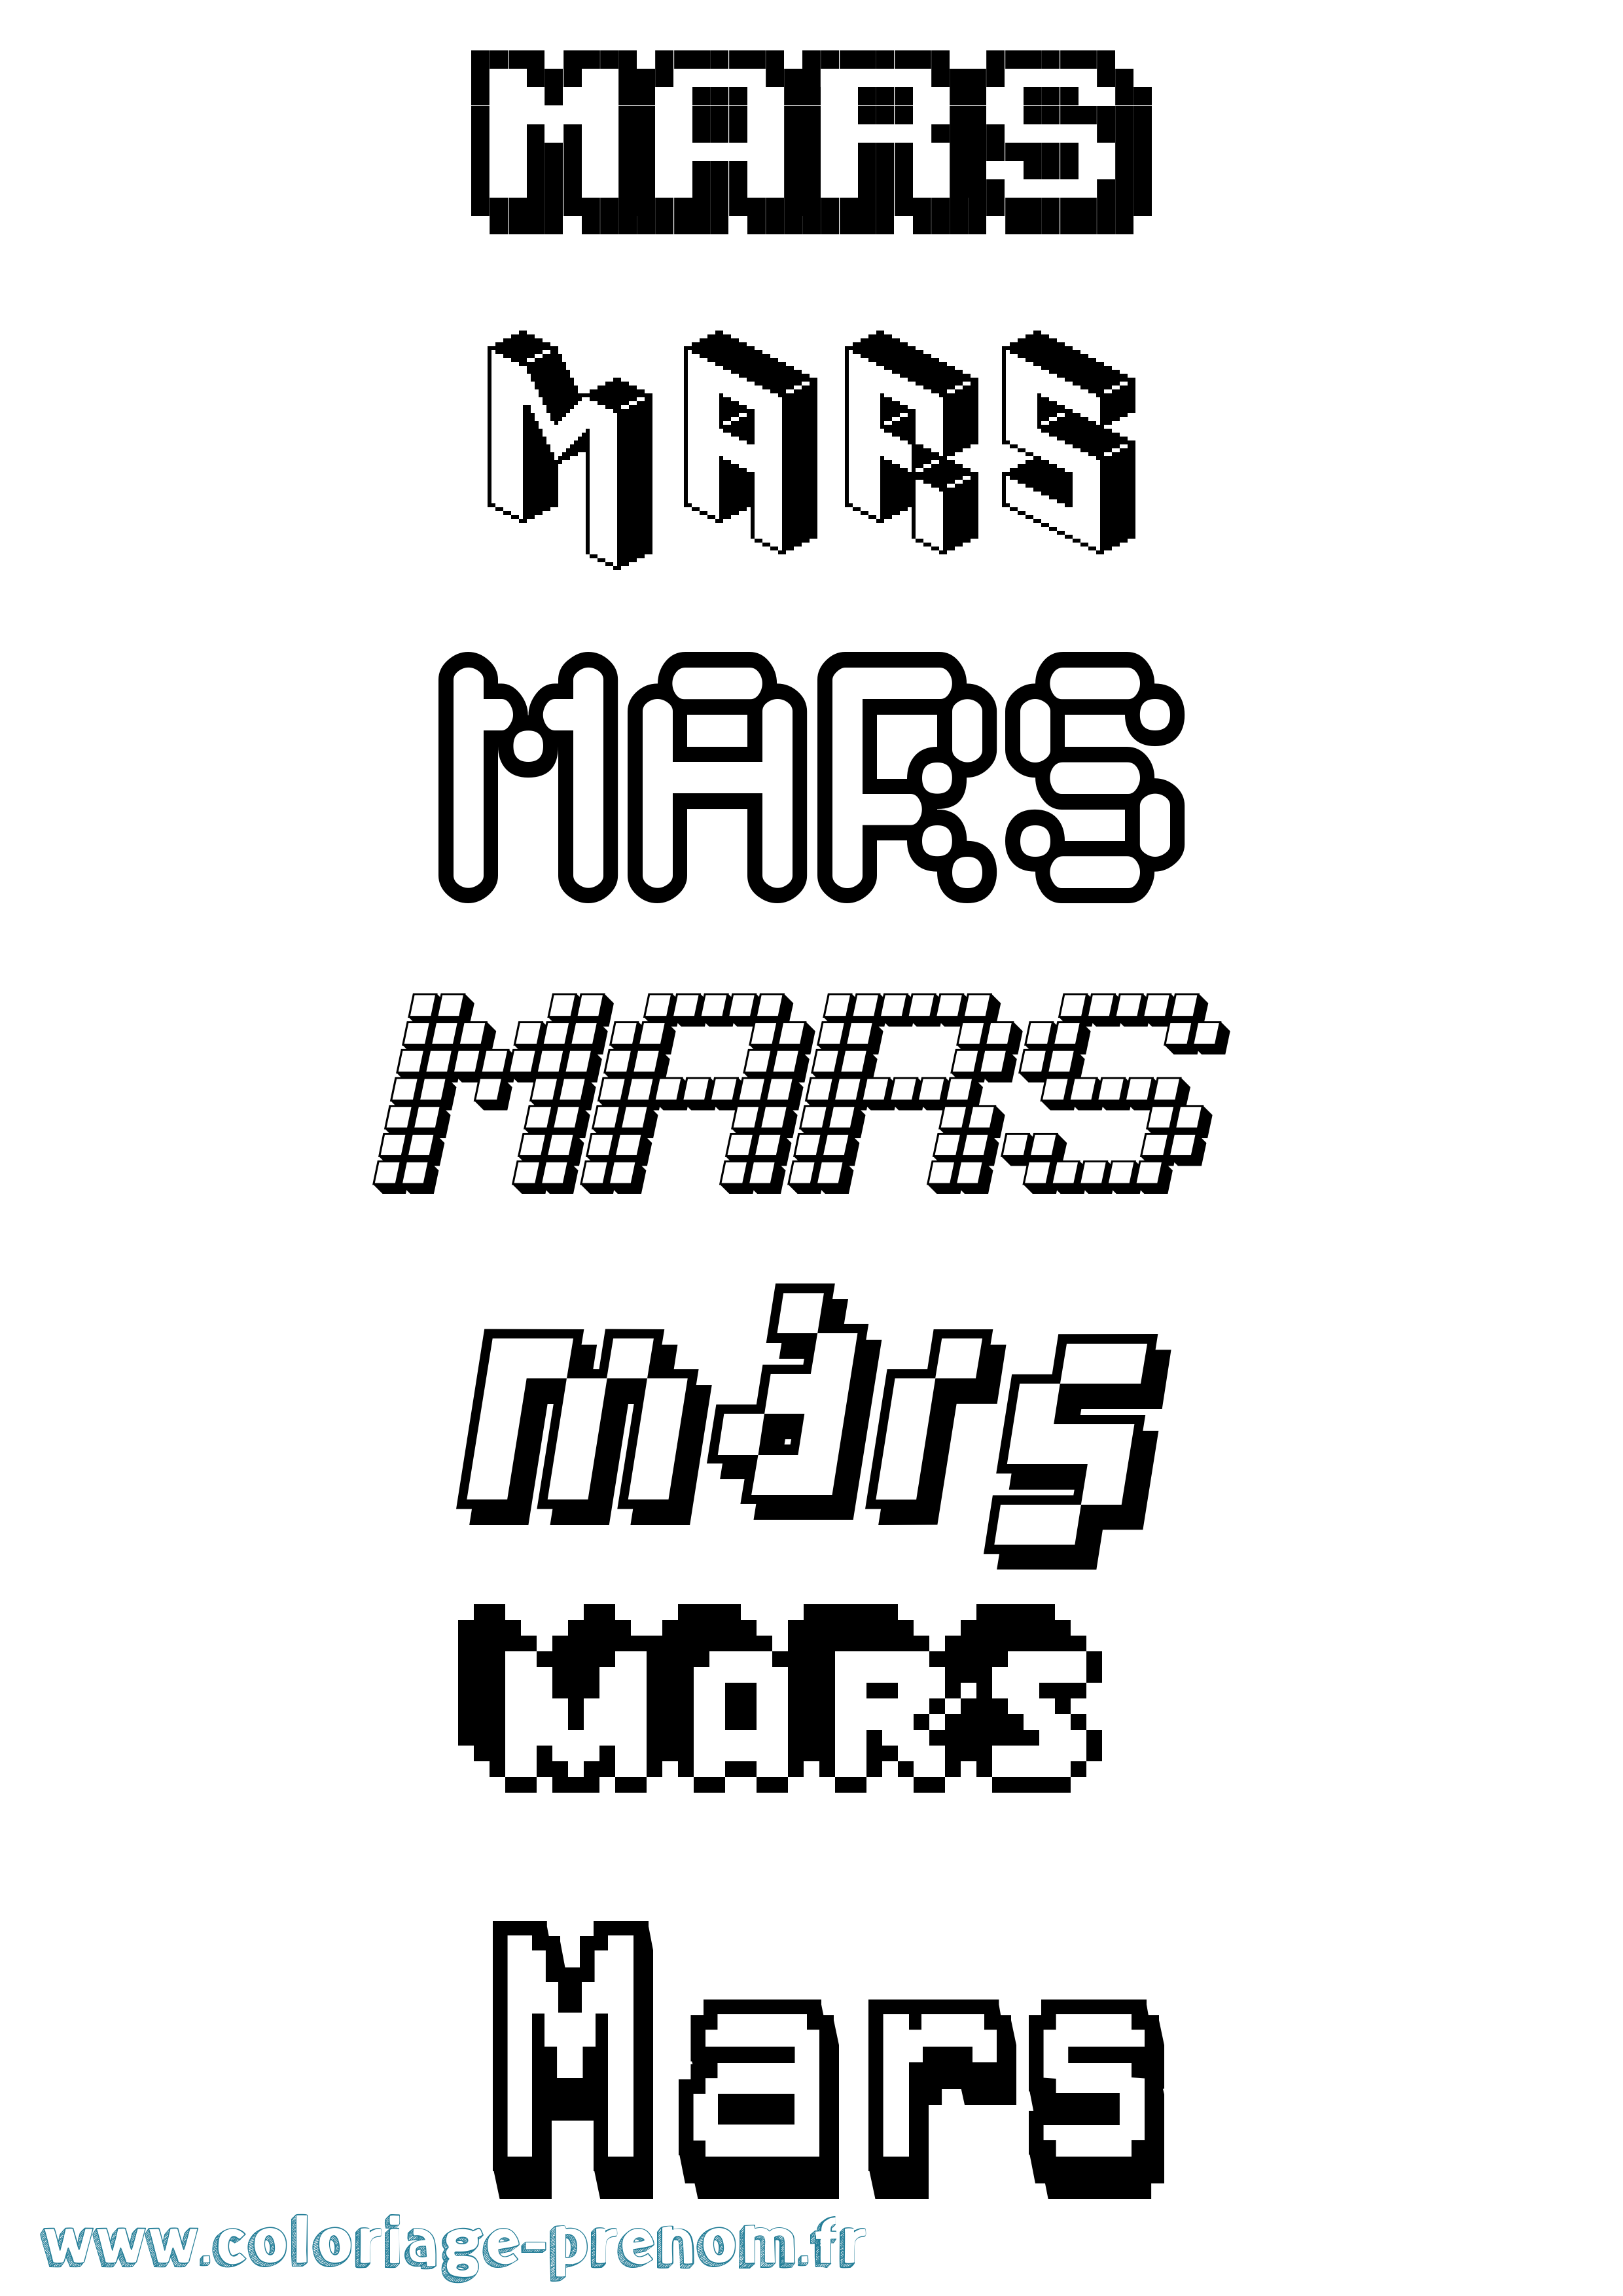 Coloriage prénom Mars Pixel